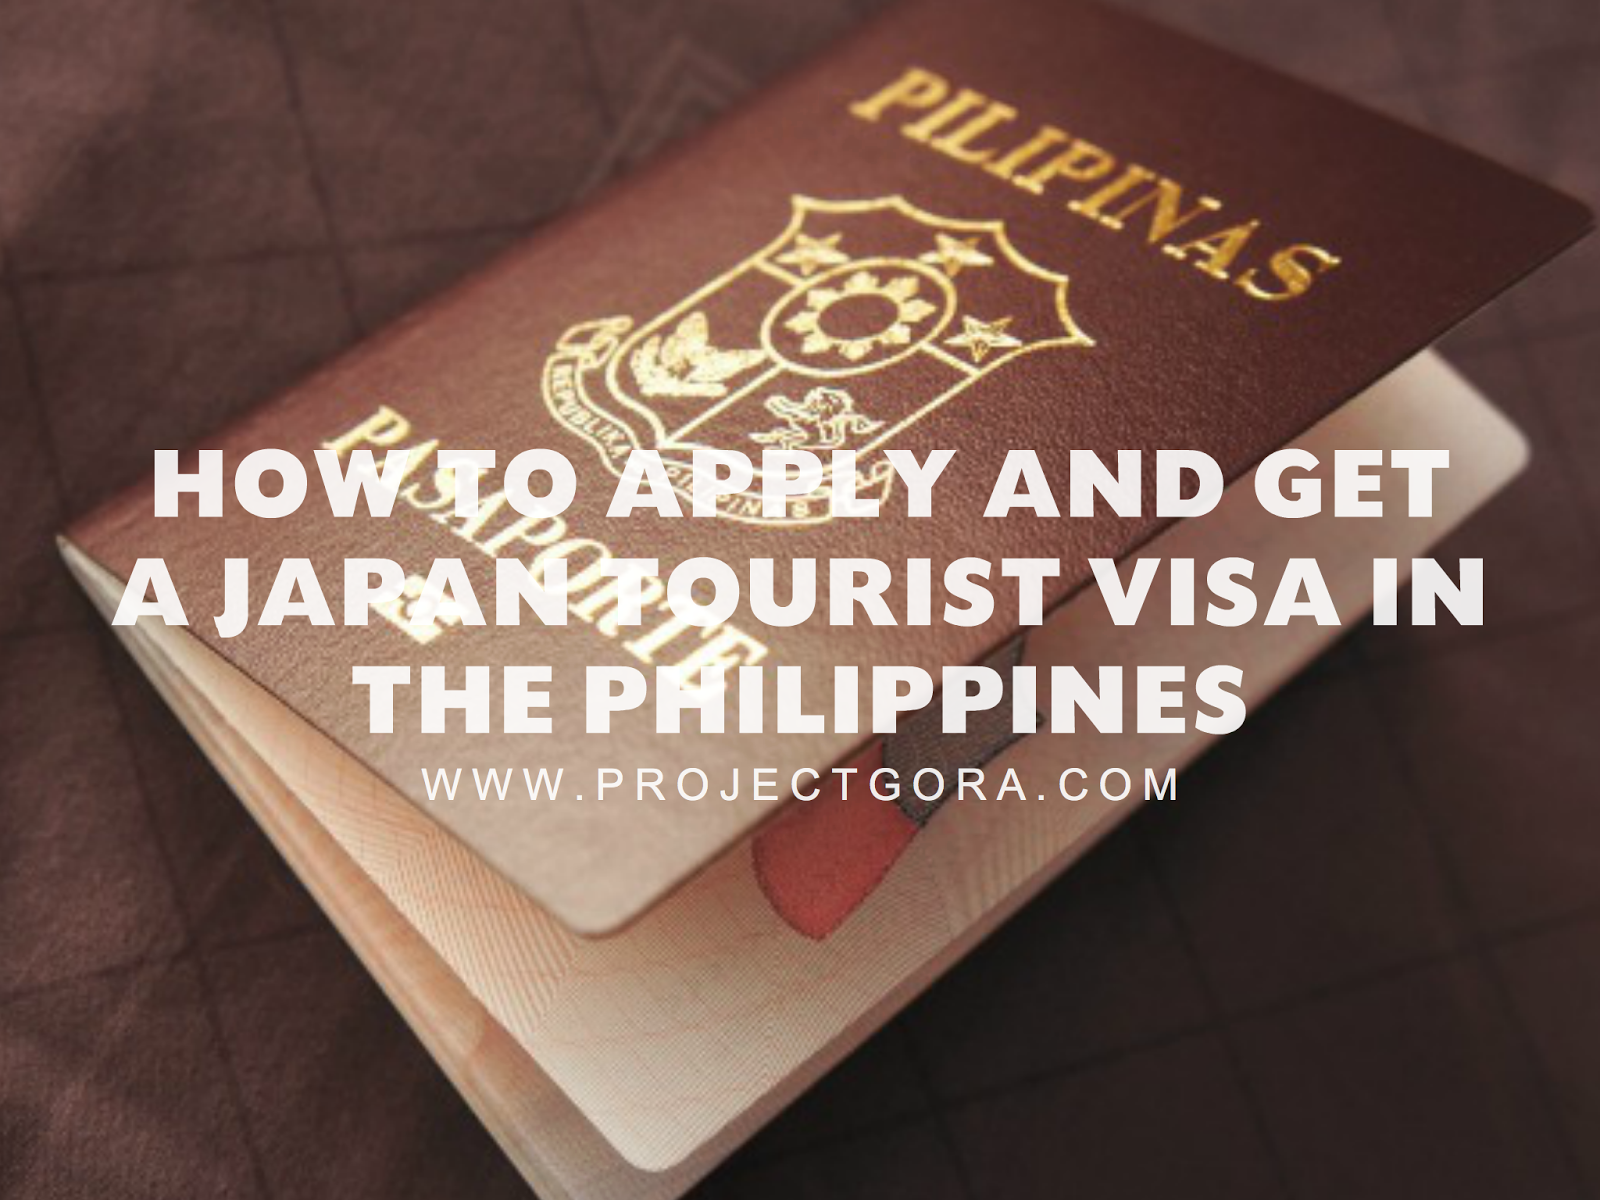 philippines travel to japan need visa